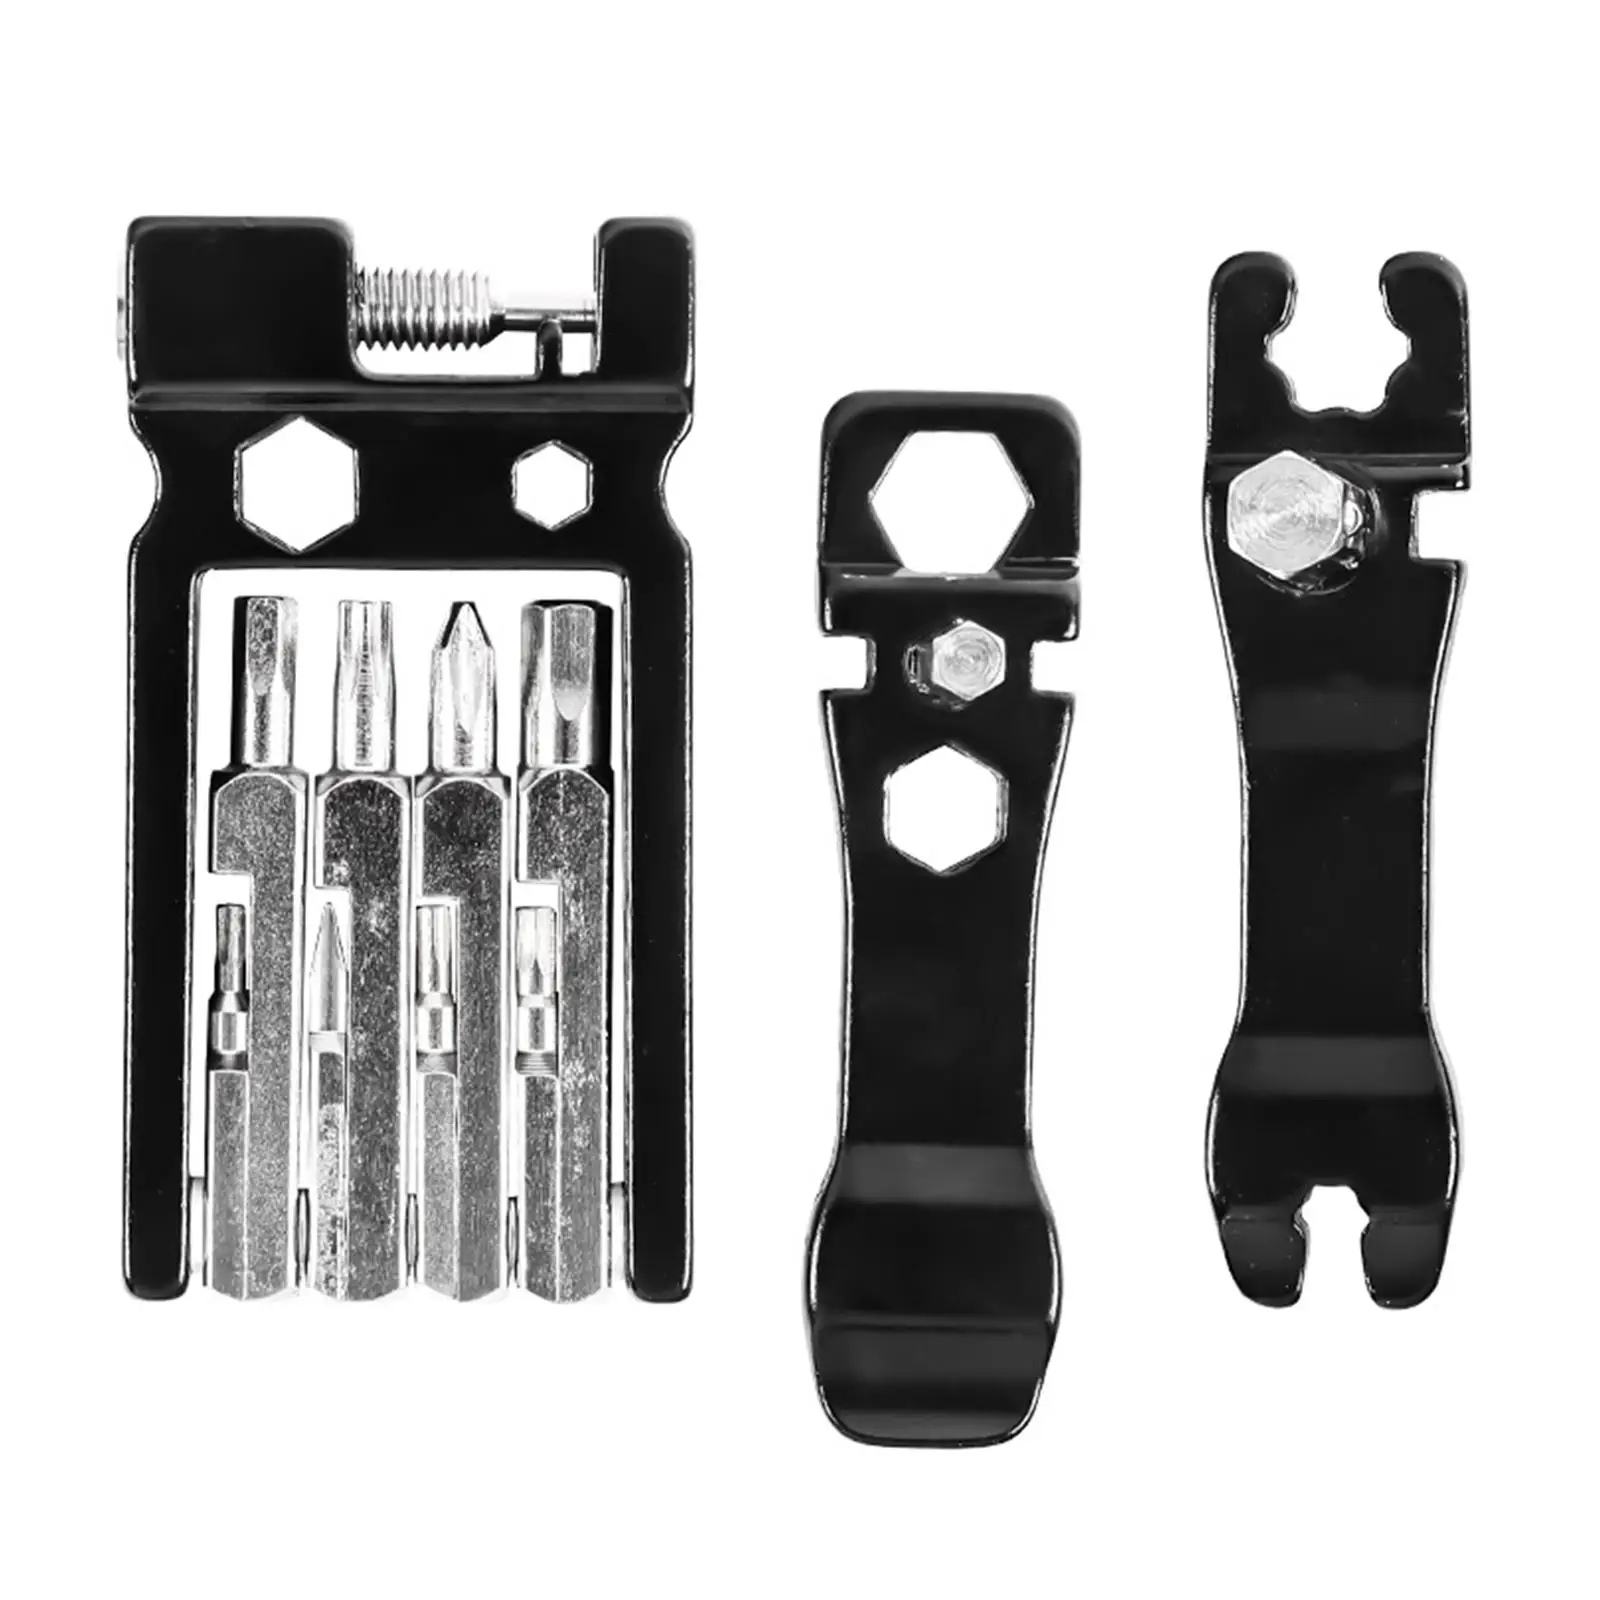 Multifunction Socket Wrench Screwdriver 20 in 1 Accessories Folding Set Bicycle Repair Tools for Camping Mountain Road Bike Bike